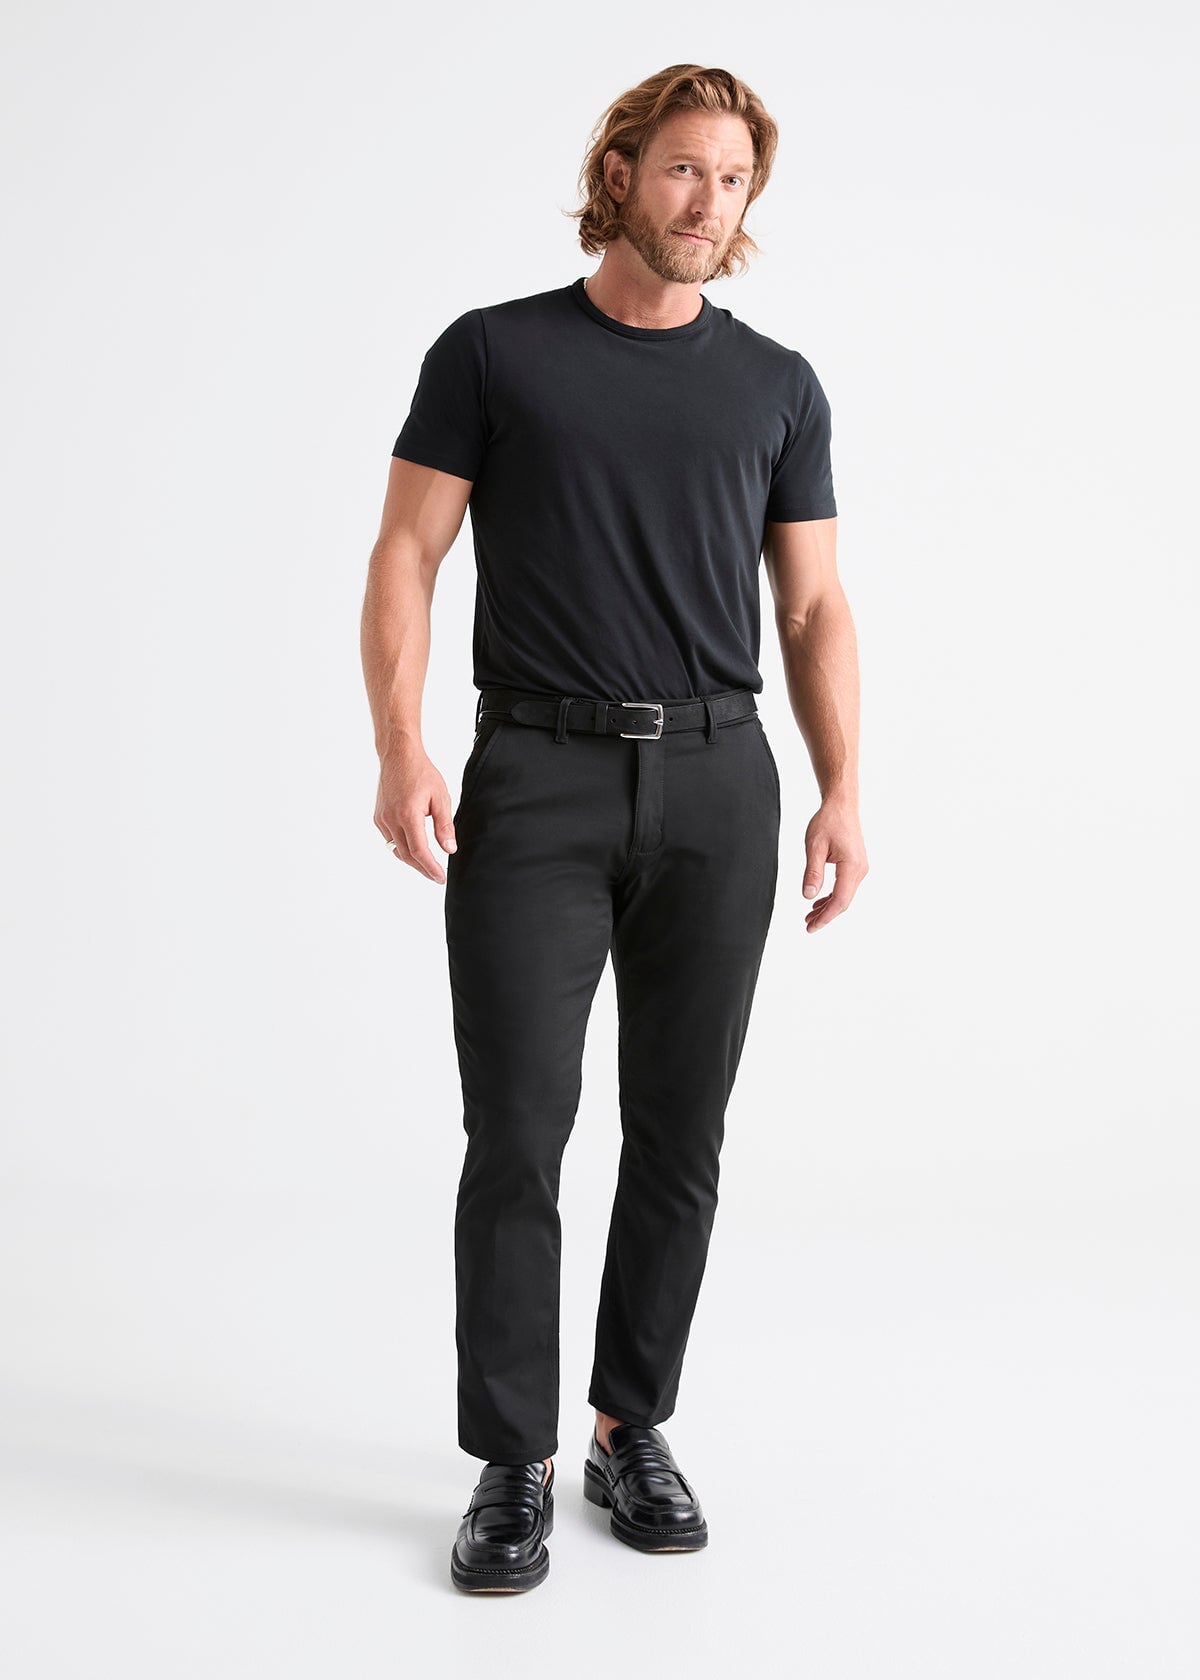 mens black dress trousers